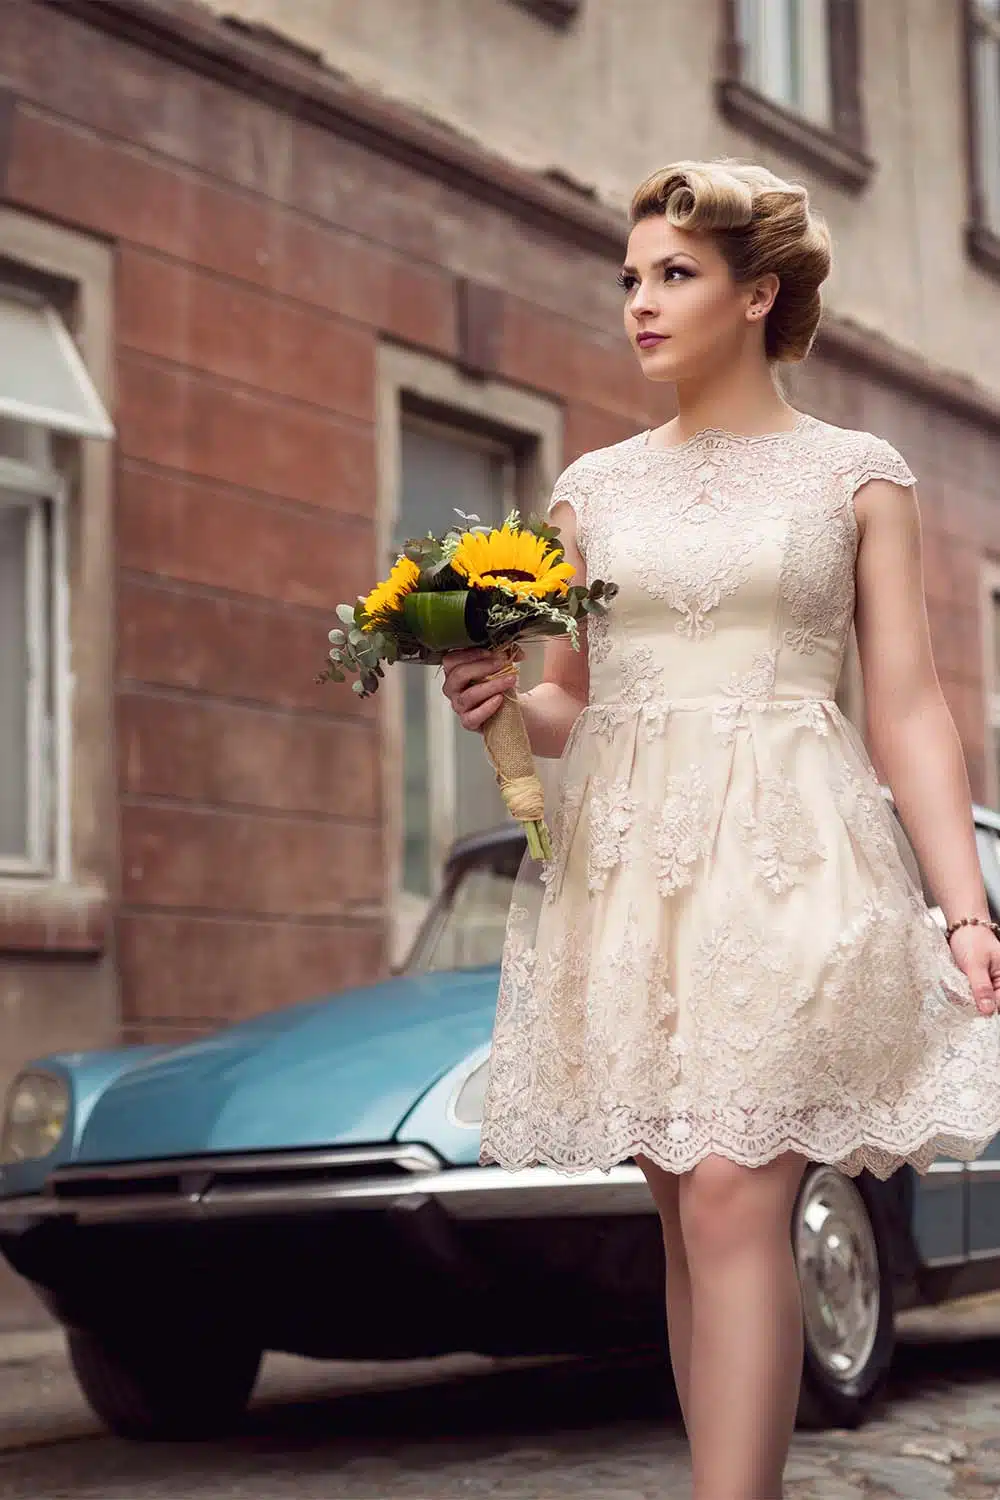 Woman walks on street wearing retro wedding dress and holding flowers.